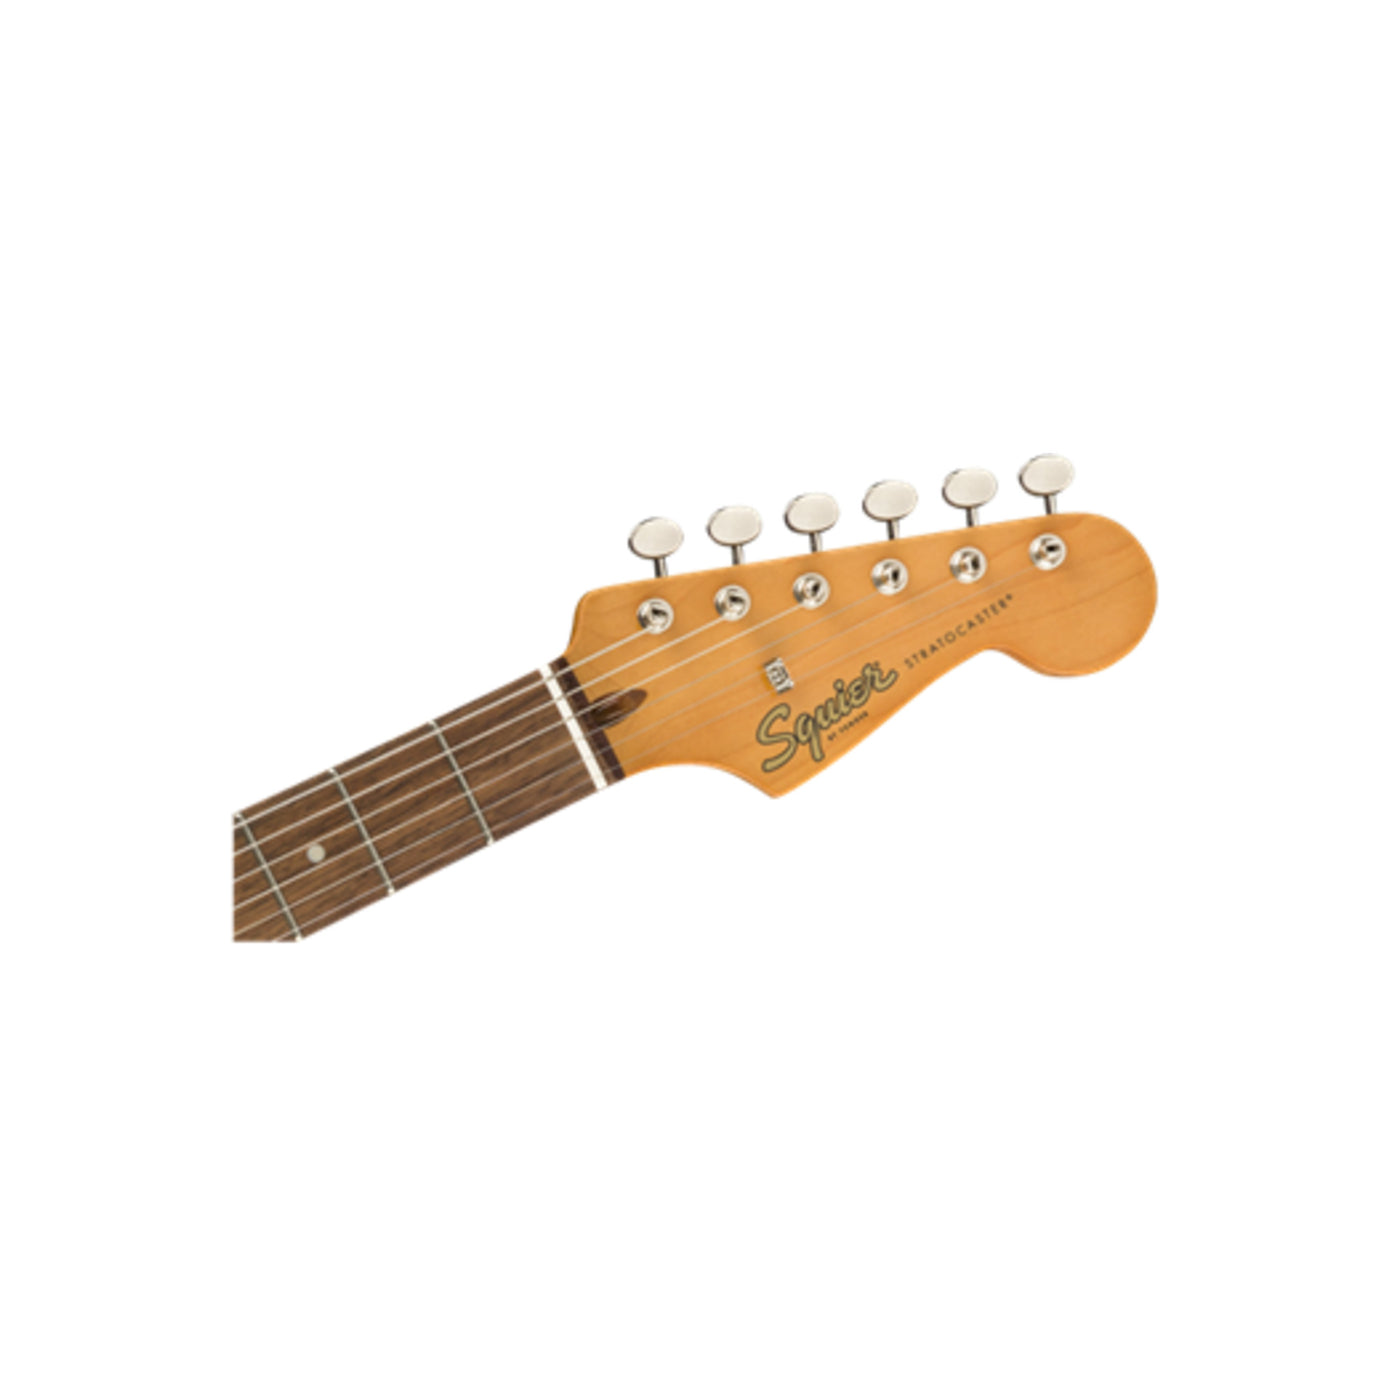 Fender Classic Vibe ‘60s Stratocaster Electric Guitar, 3-Color Sunburst (0374010500)